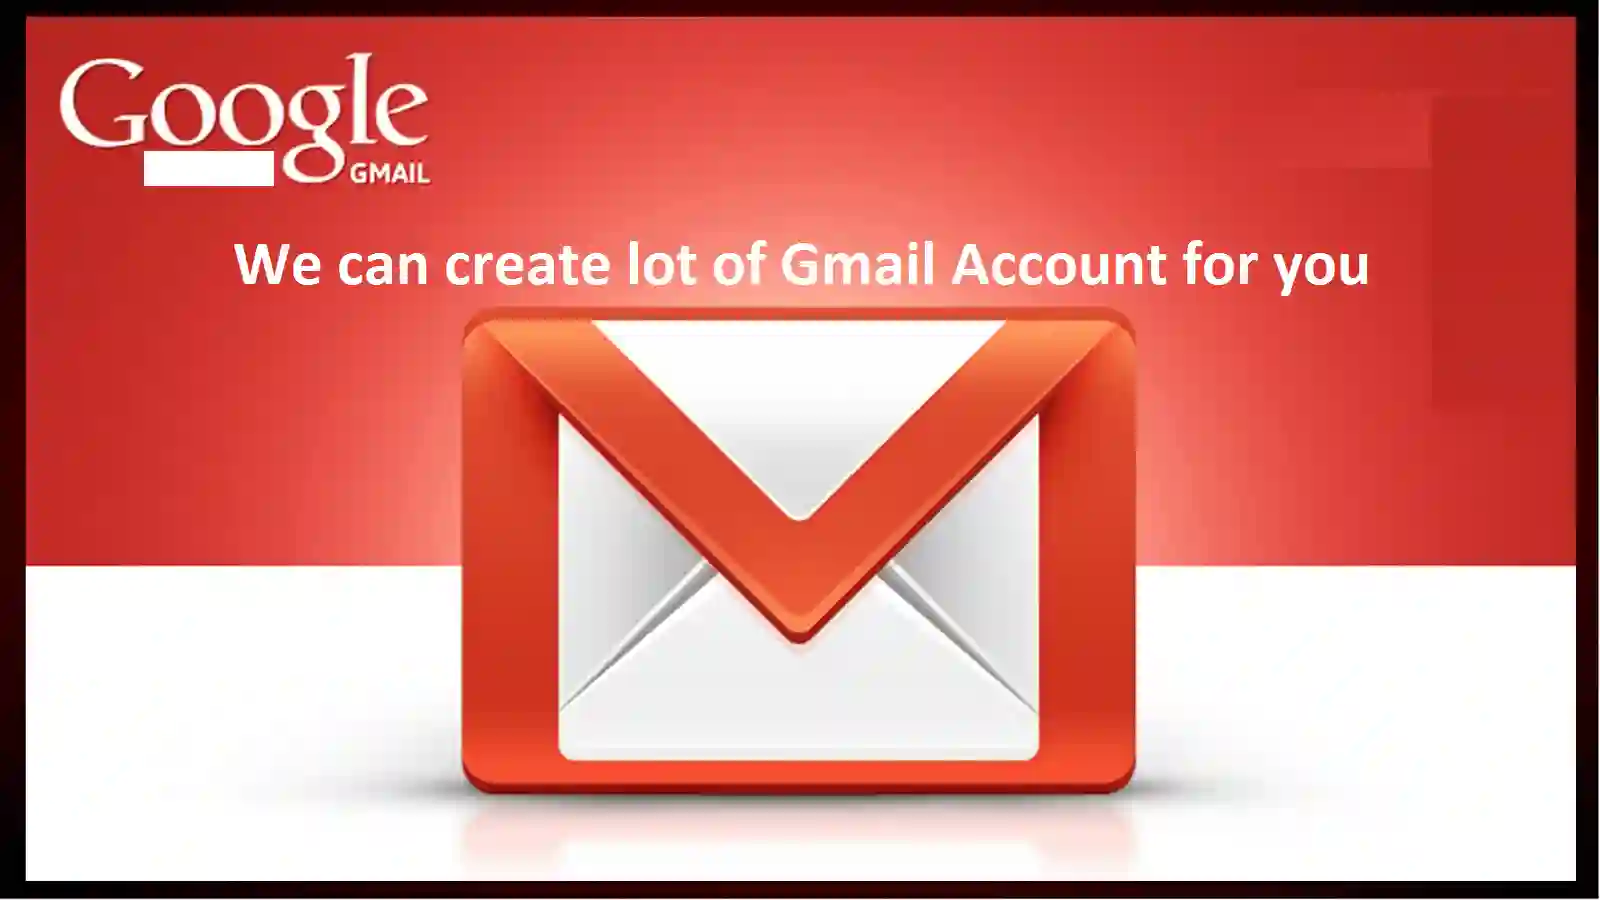 Buy Gmail accounts